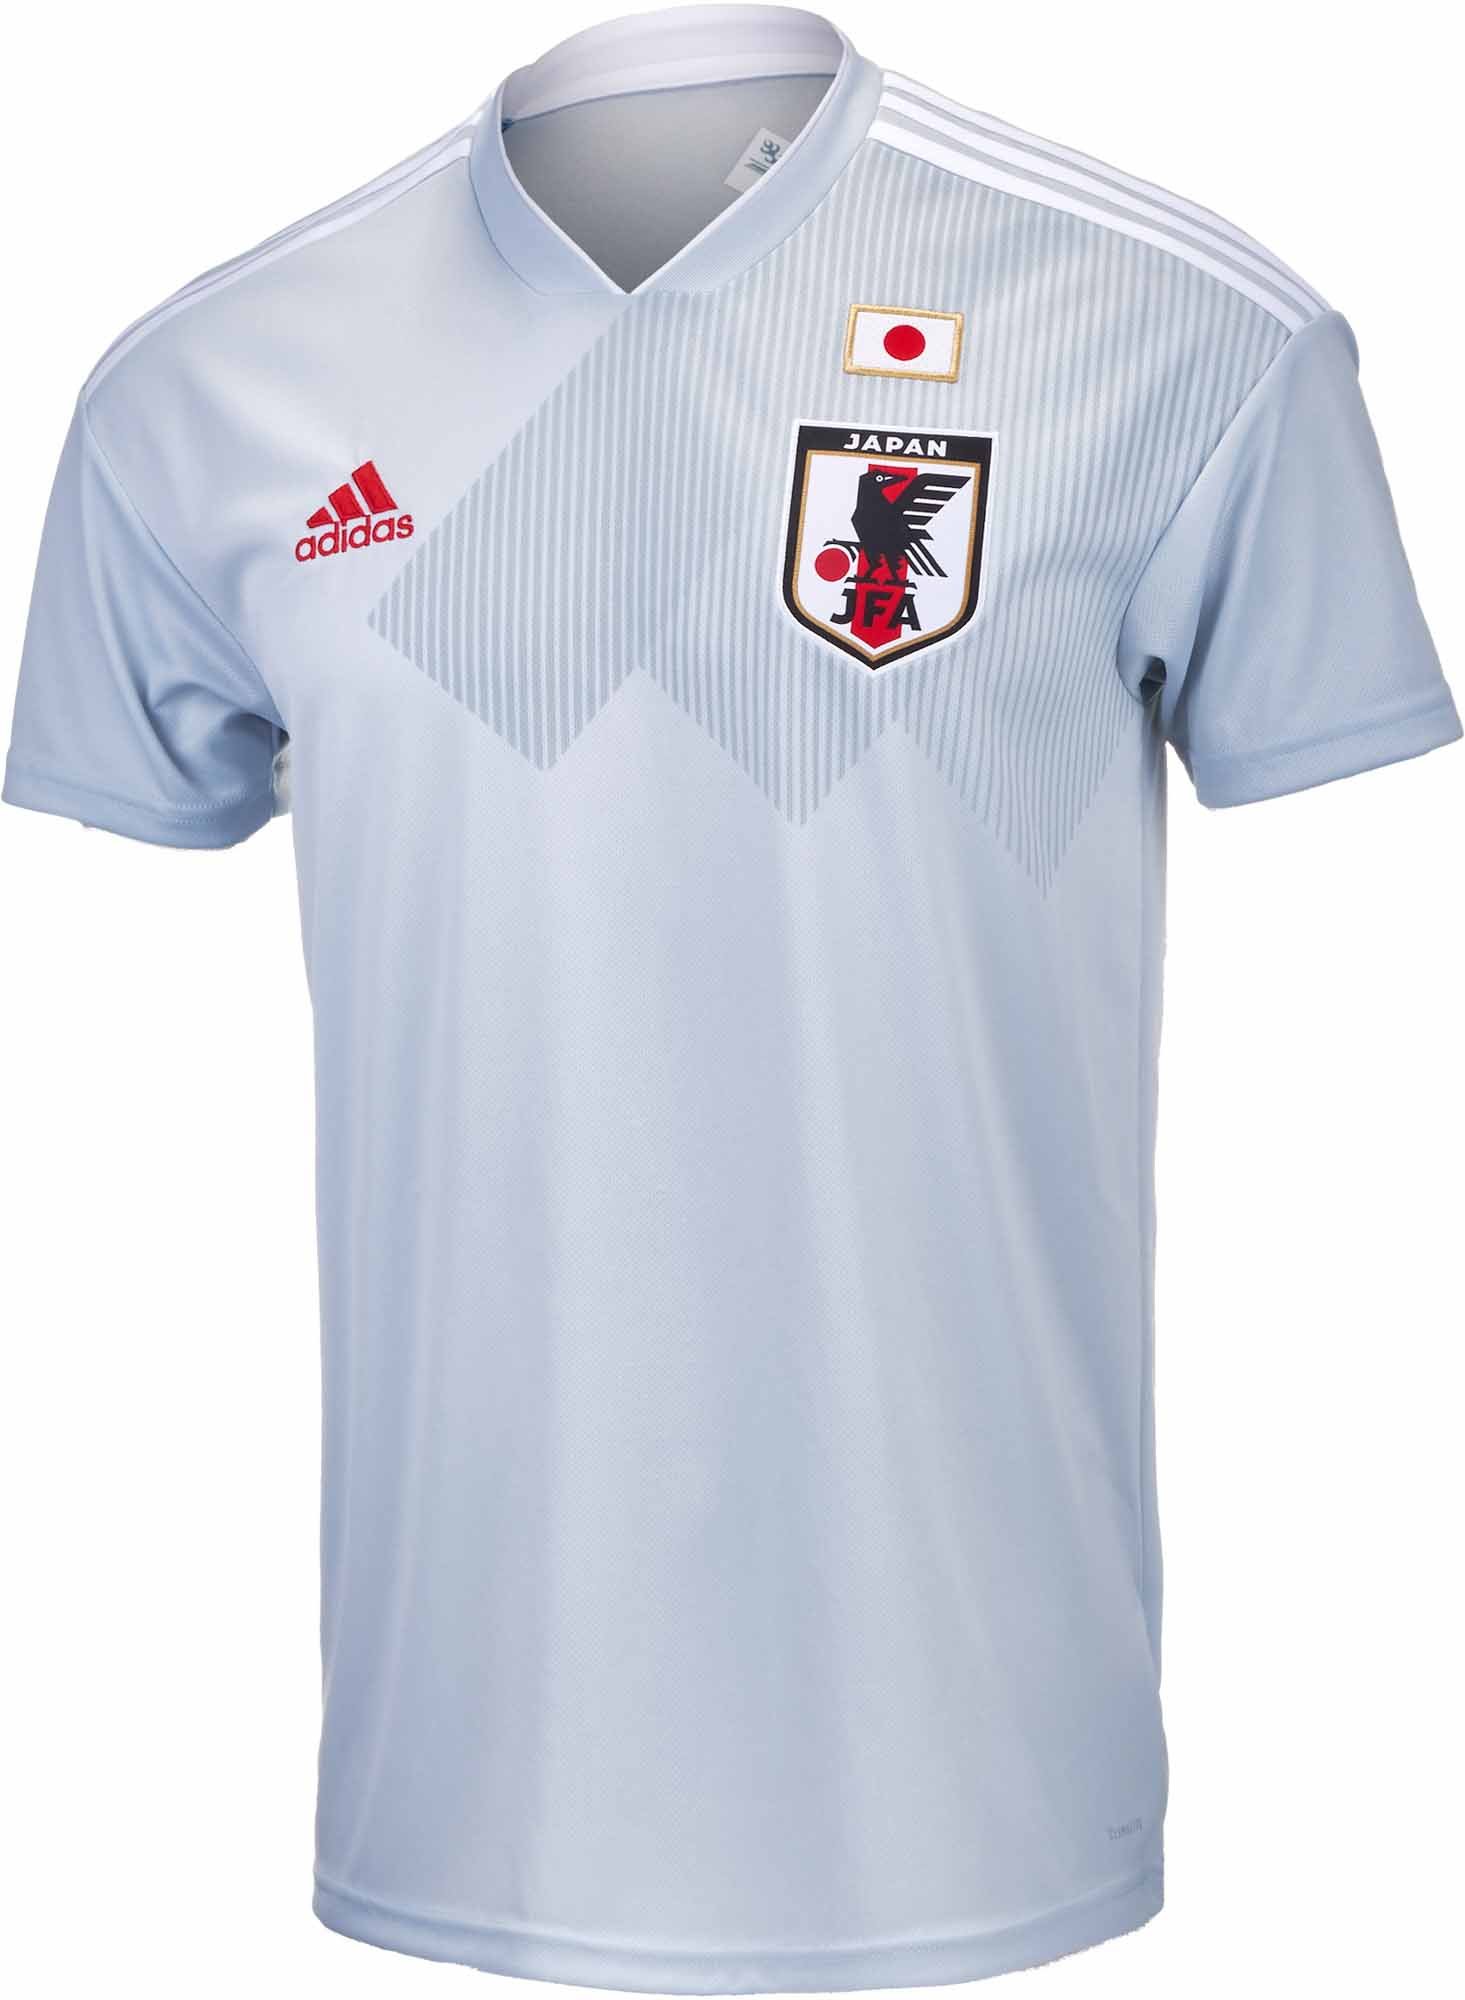 adidas japan soccer